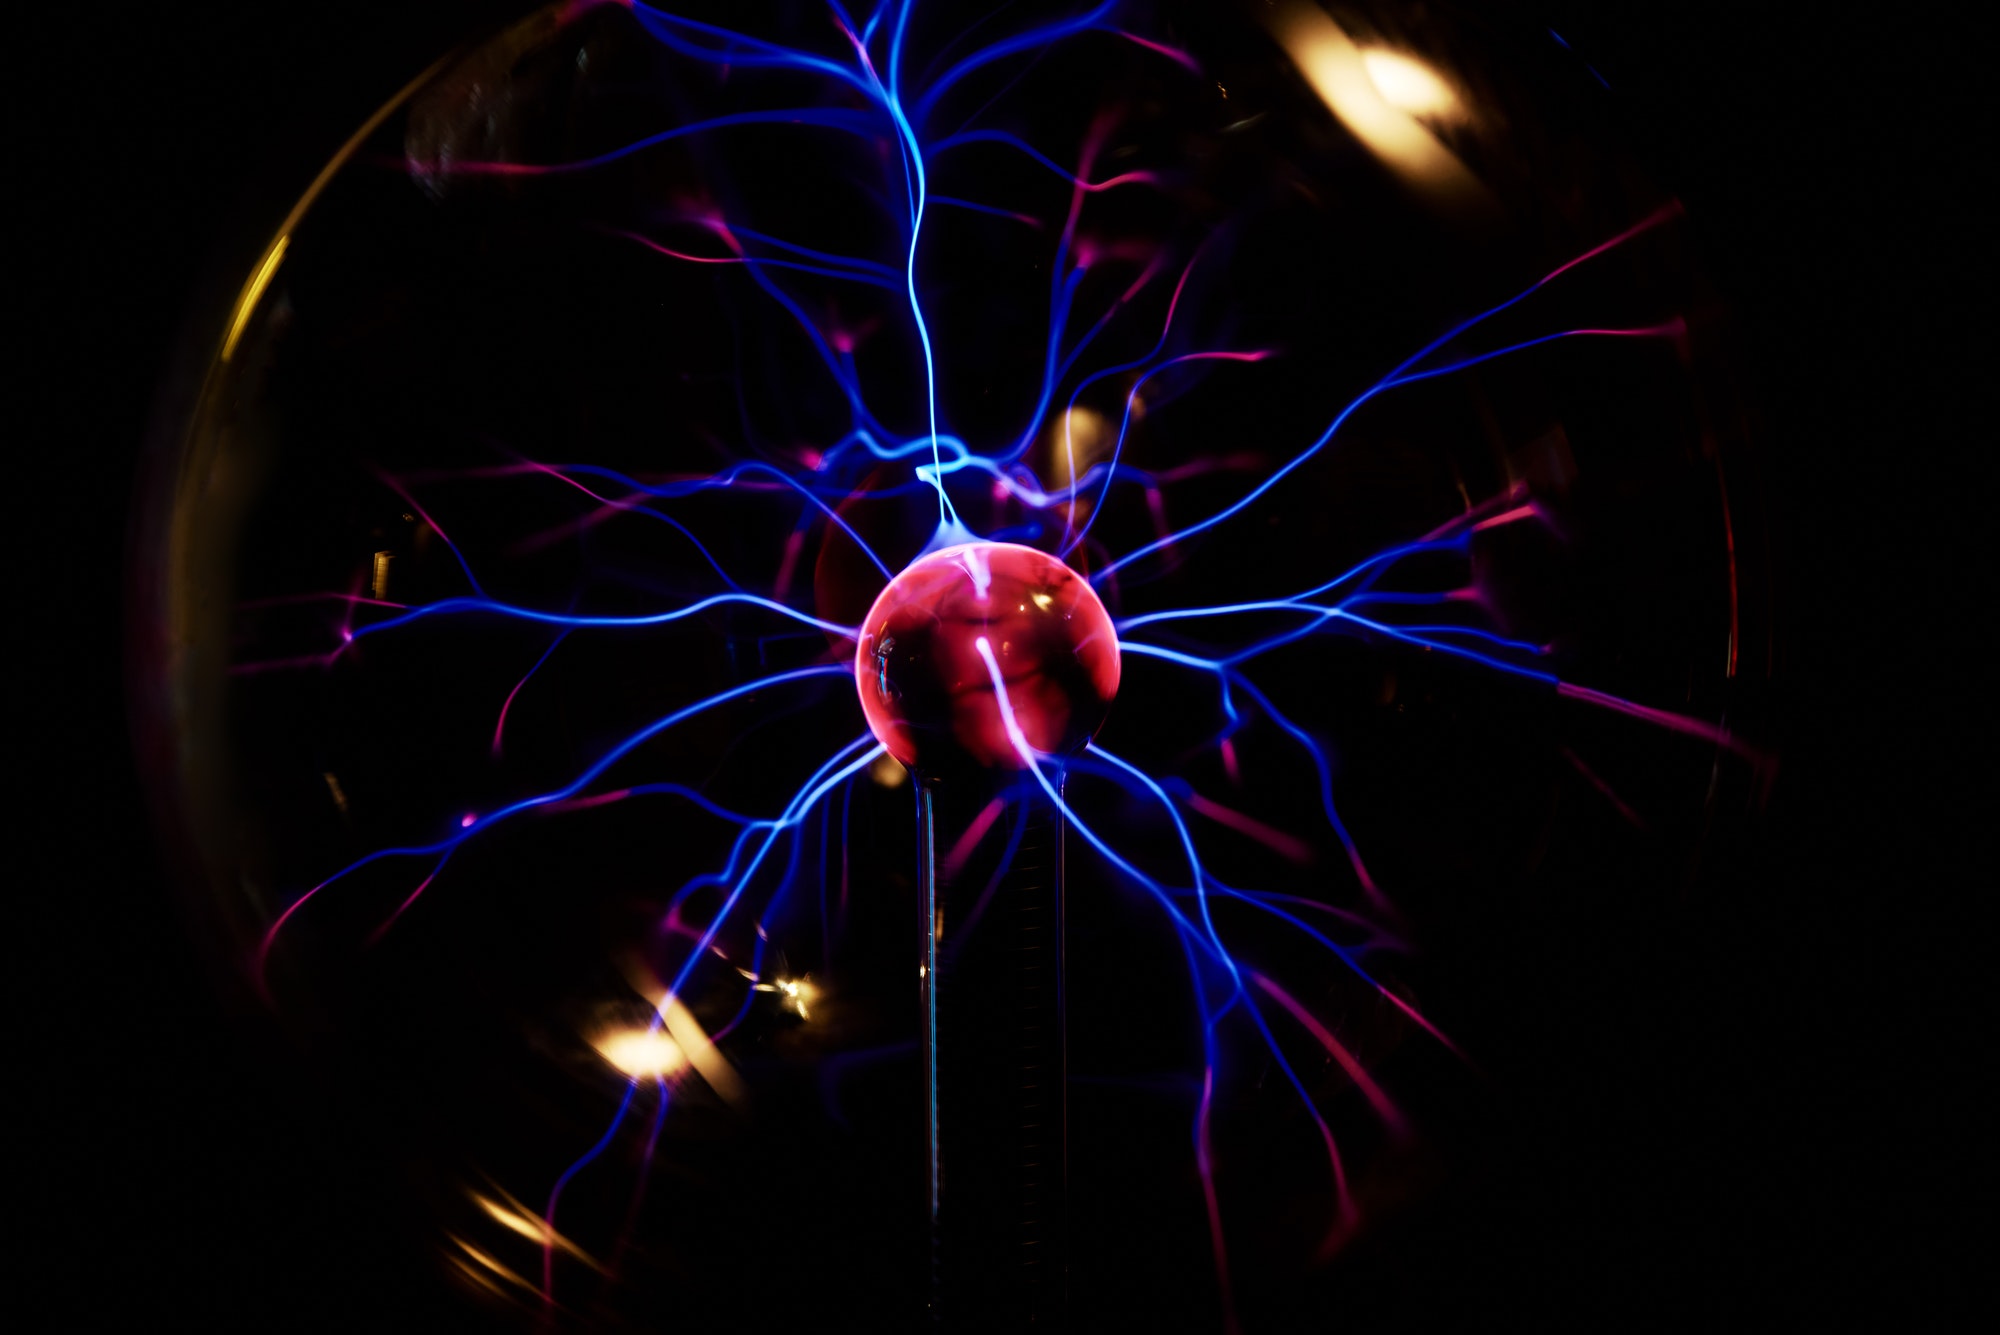 Plasma ball with energy rays on dark background